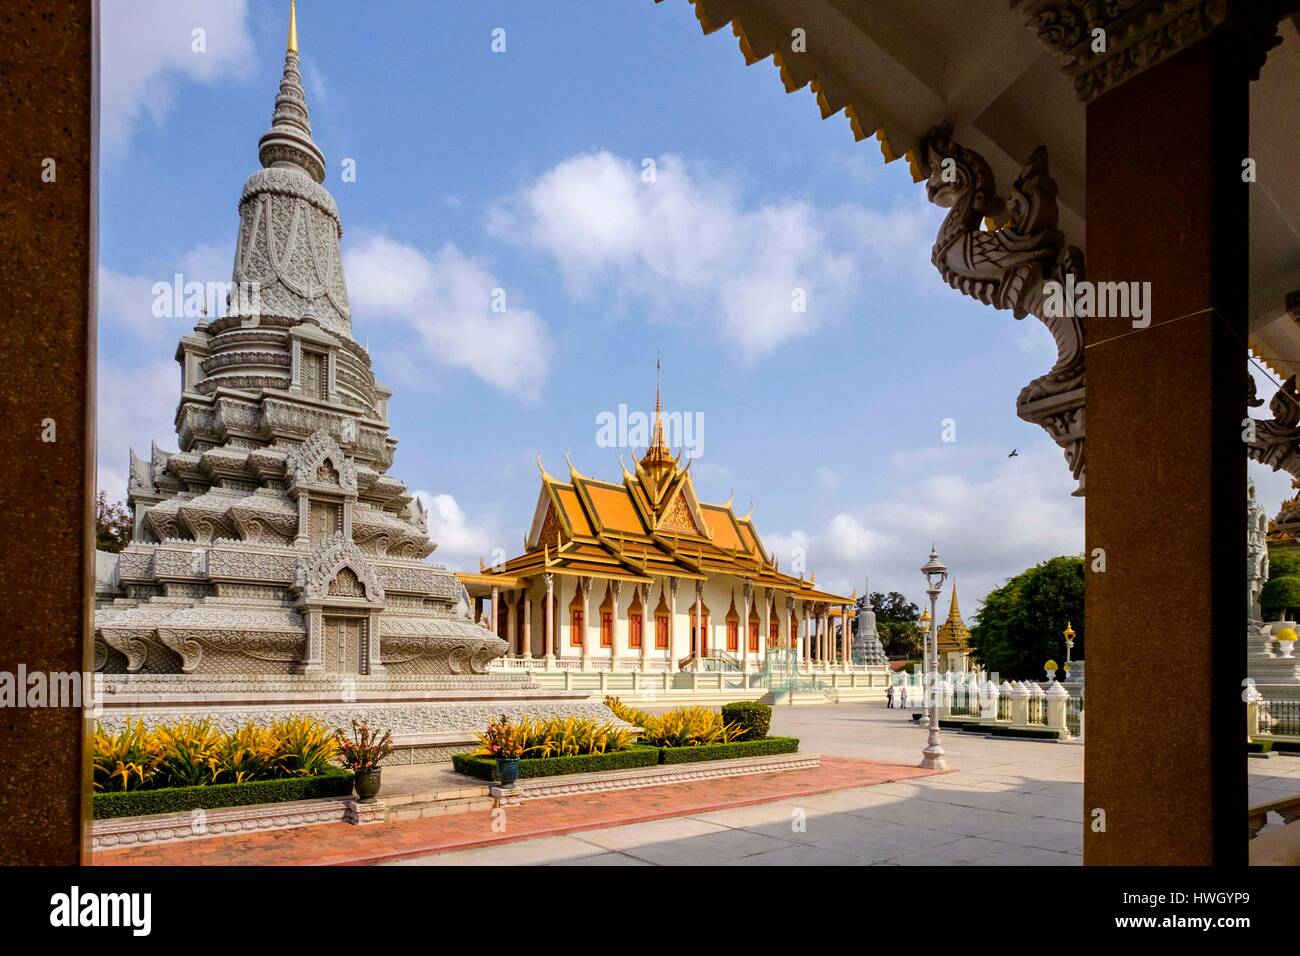 Cambodia, Phnom Penh, Silver Pagoda inside the Royal palace, dated 19 th century Stock Photo